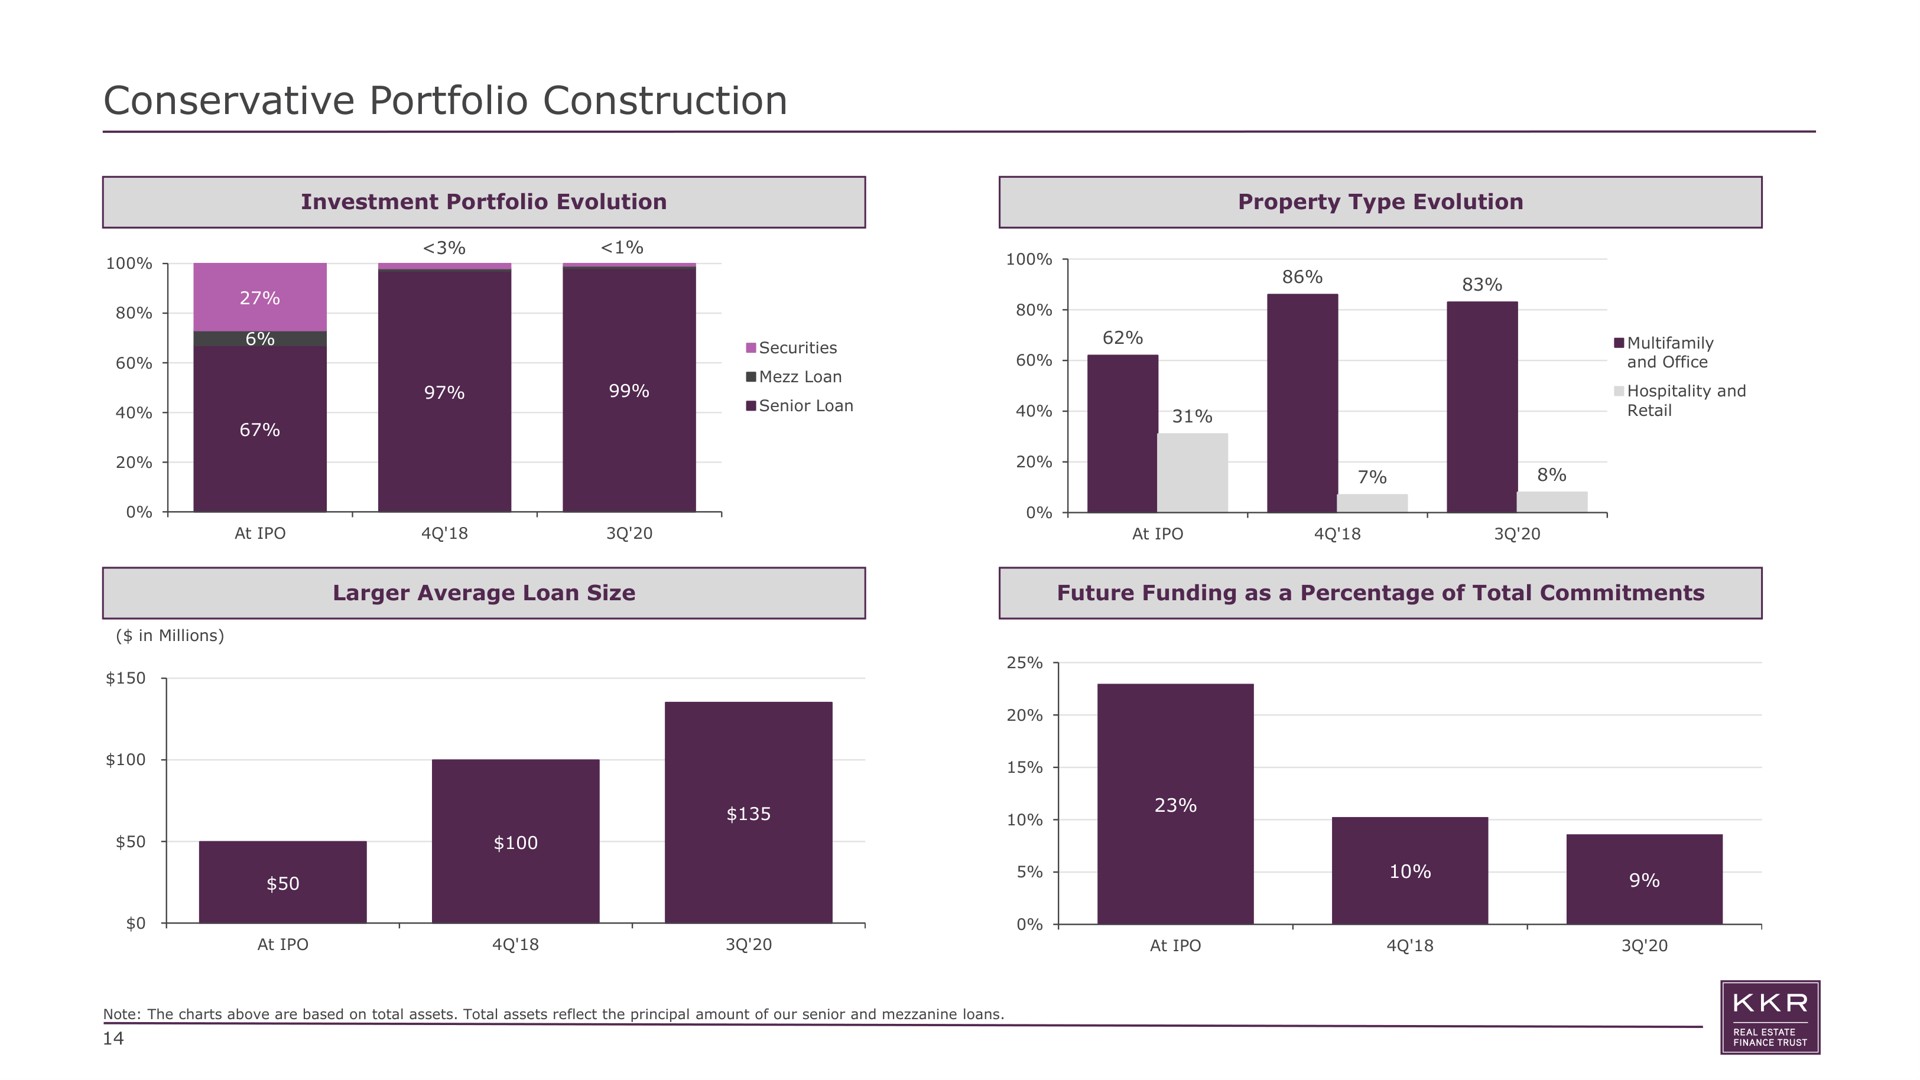 conservative portfolio construction ben | KKR Real Estate Finance Trust